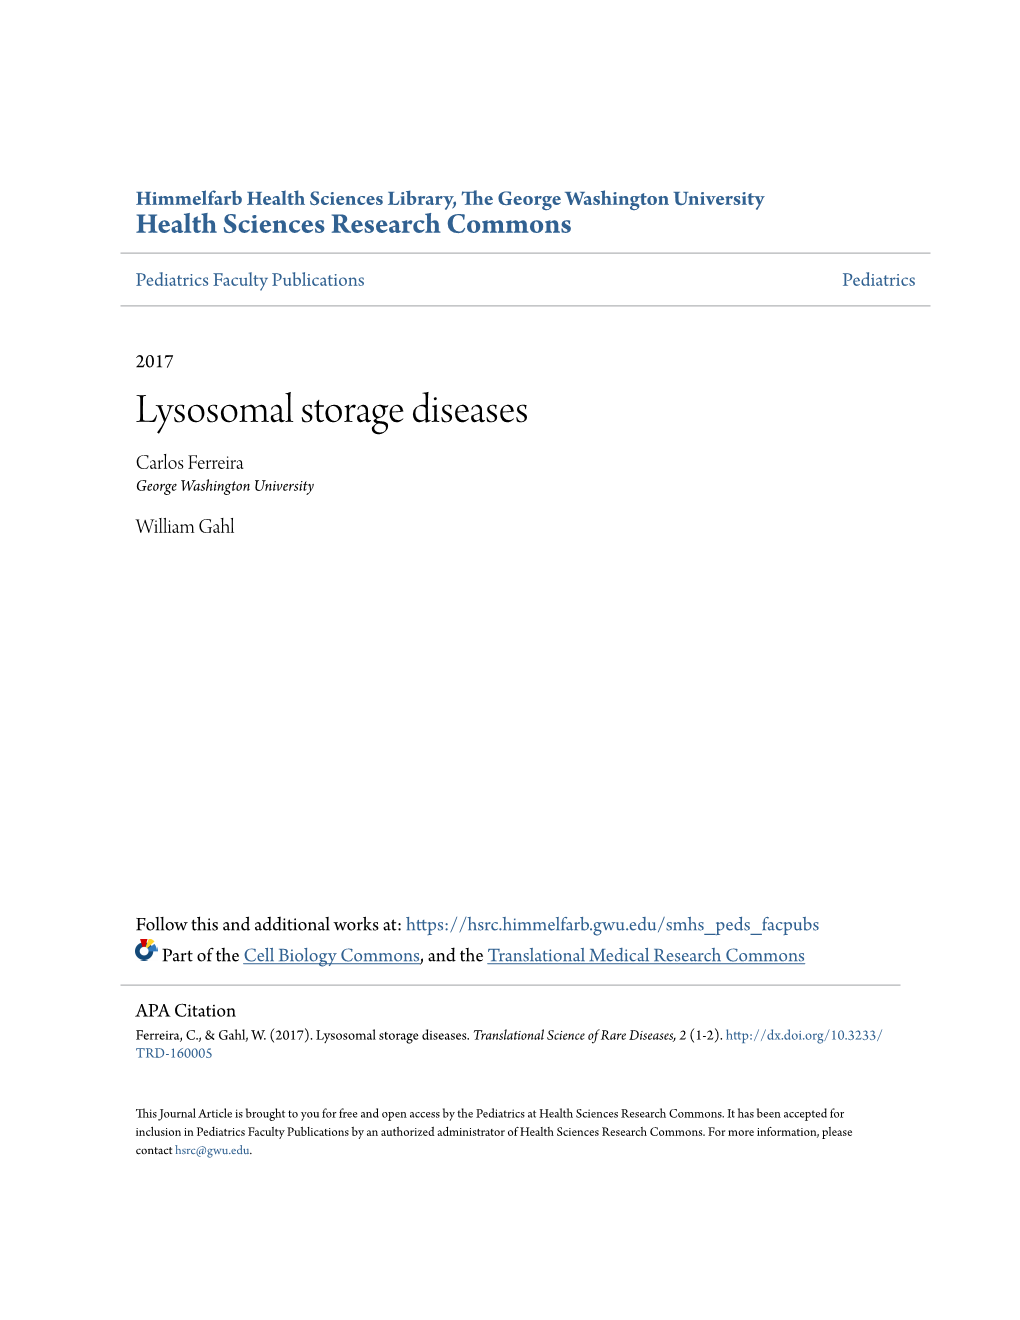 Lysosomal Storage Diseases Carlos Ferreira George Washington University